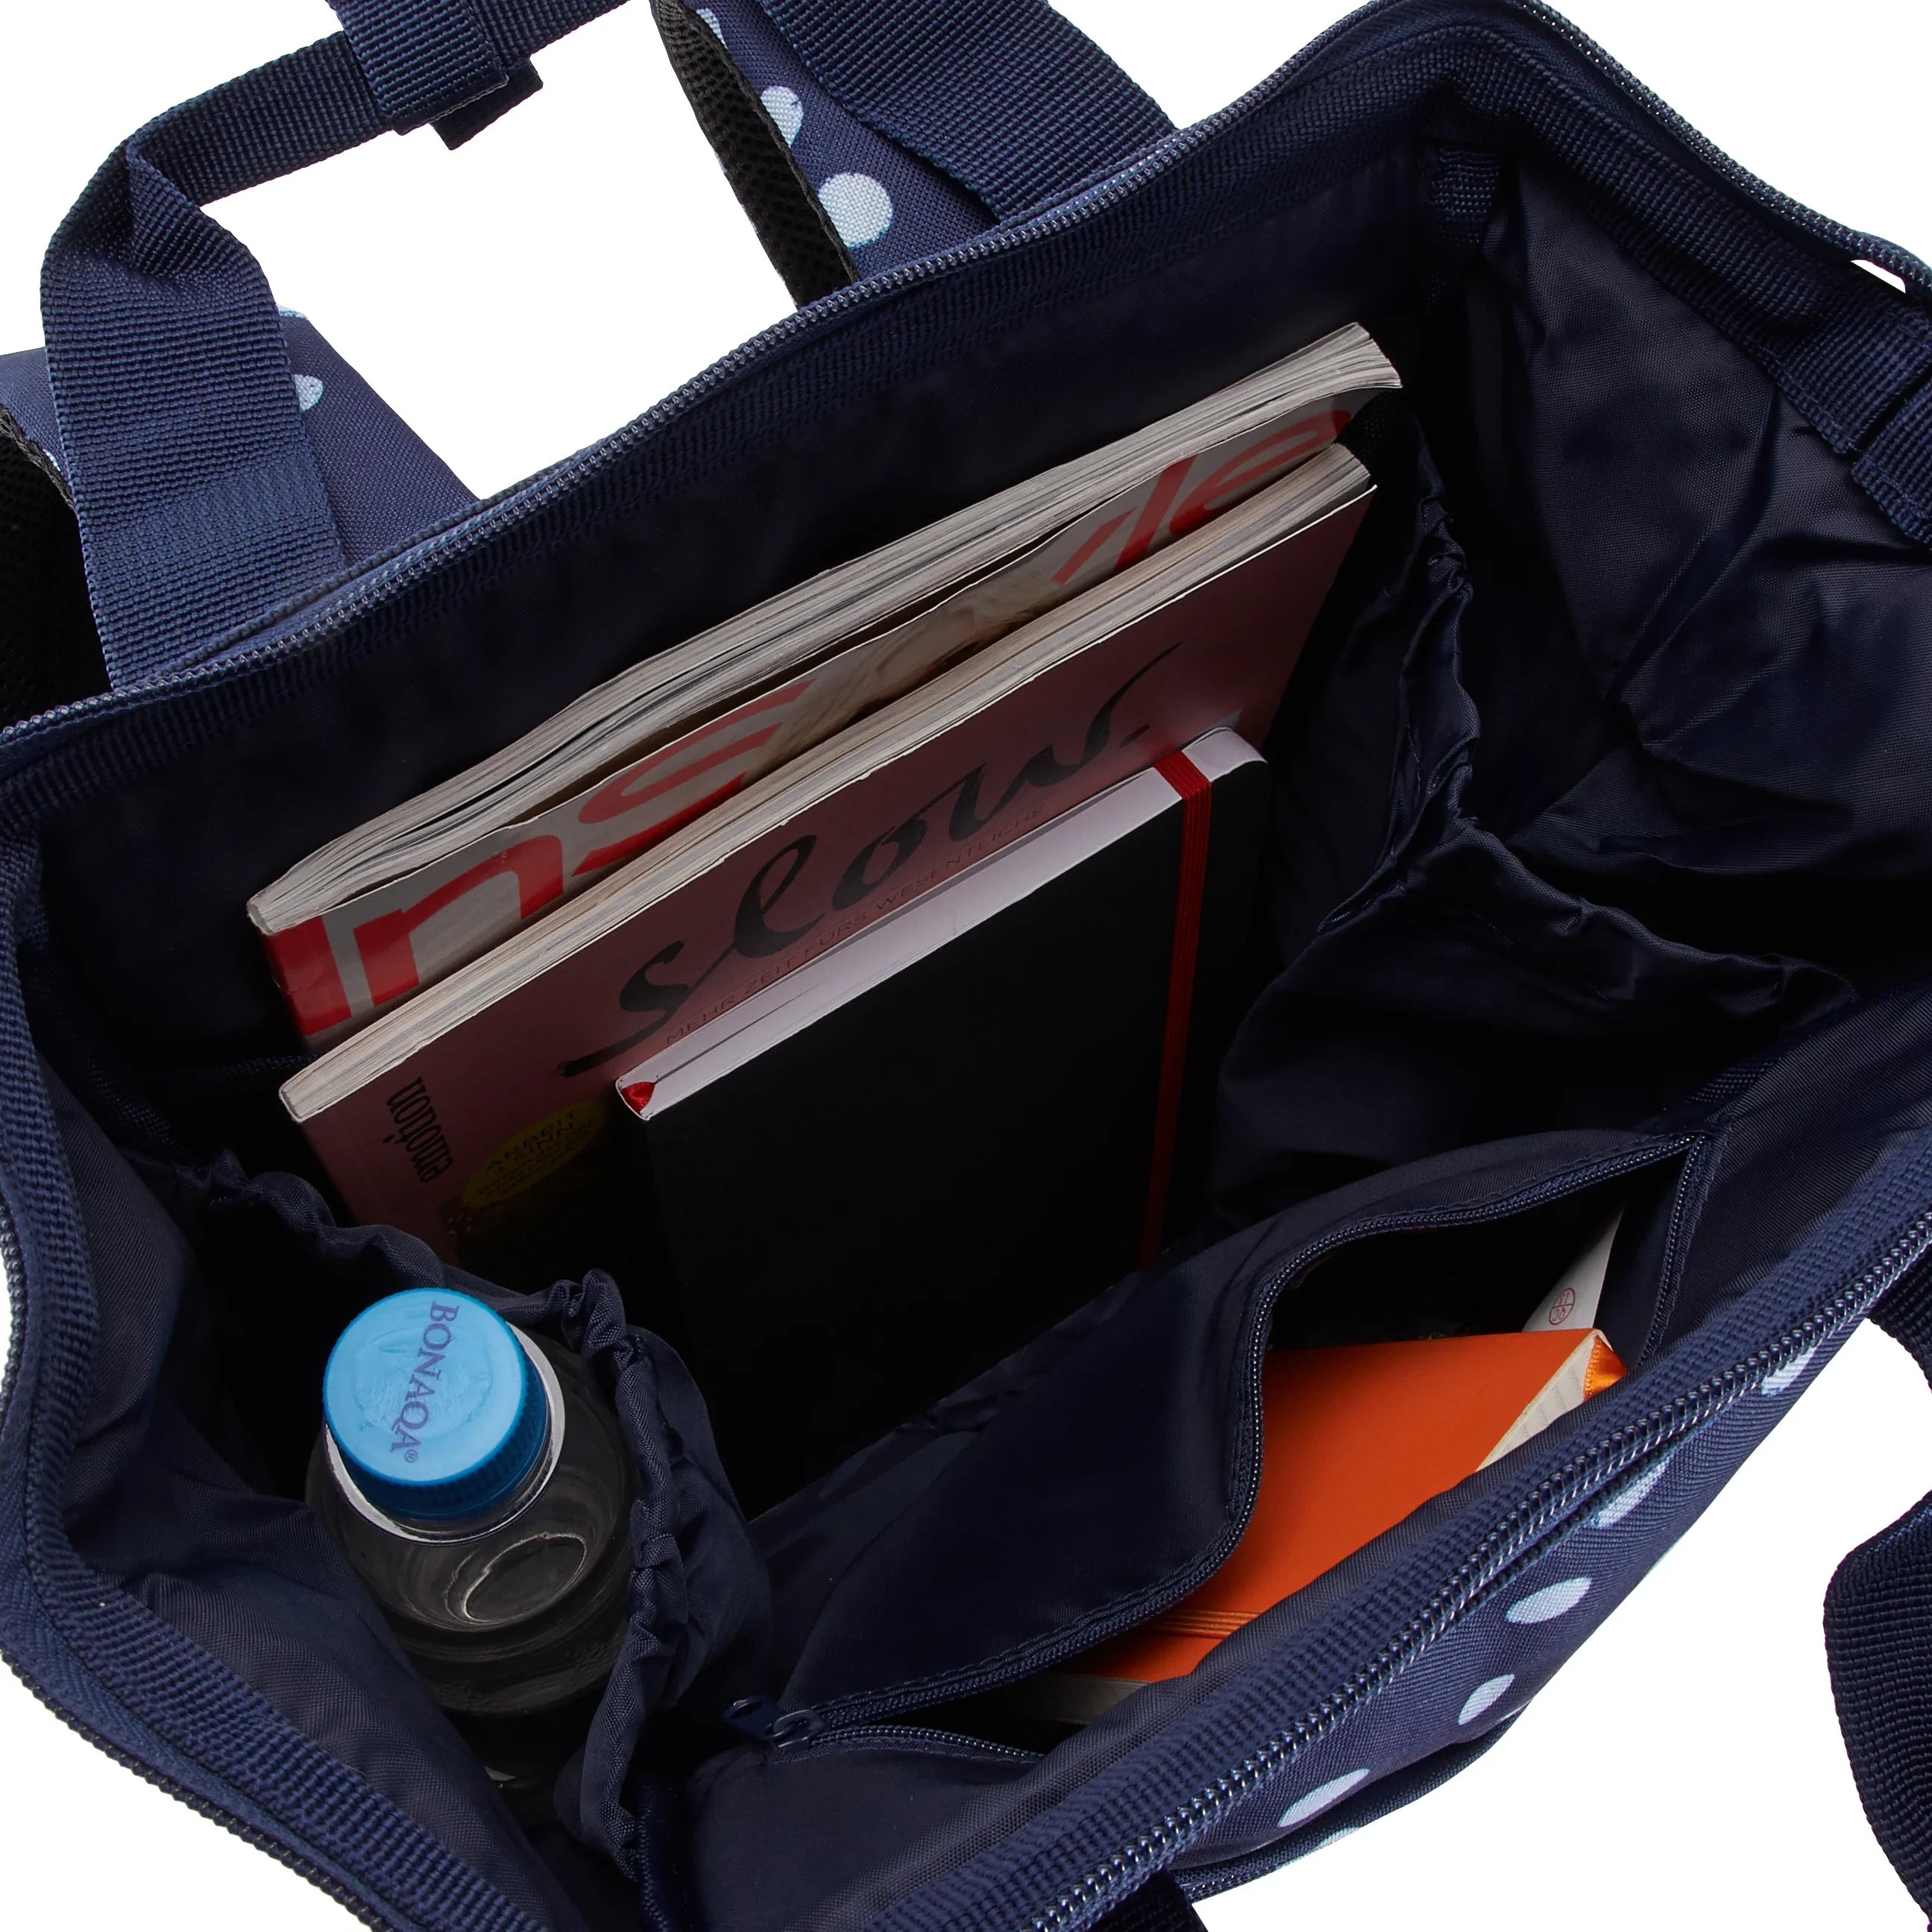 Reisenthel Travelling Allrounder R backpack 40 cm - op-art